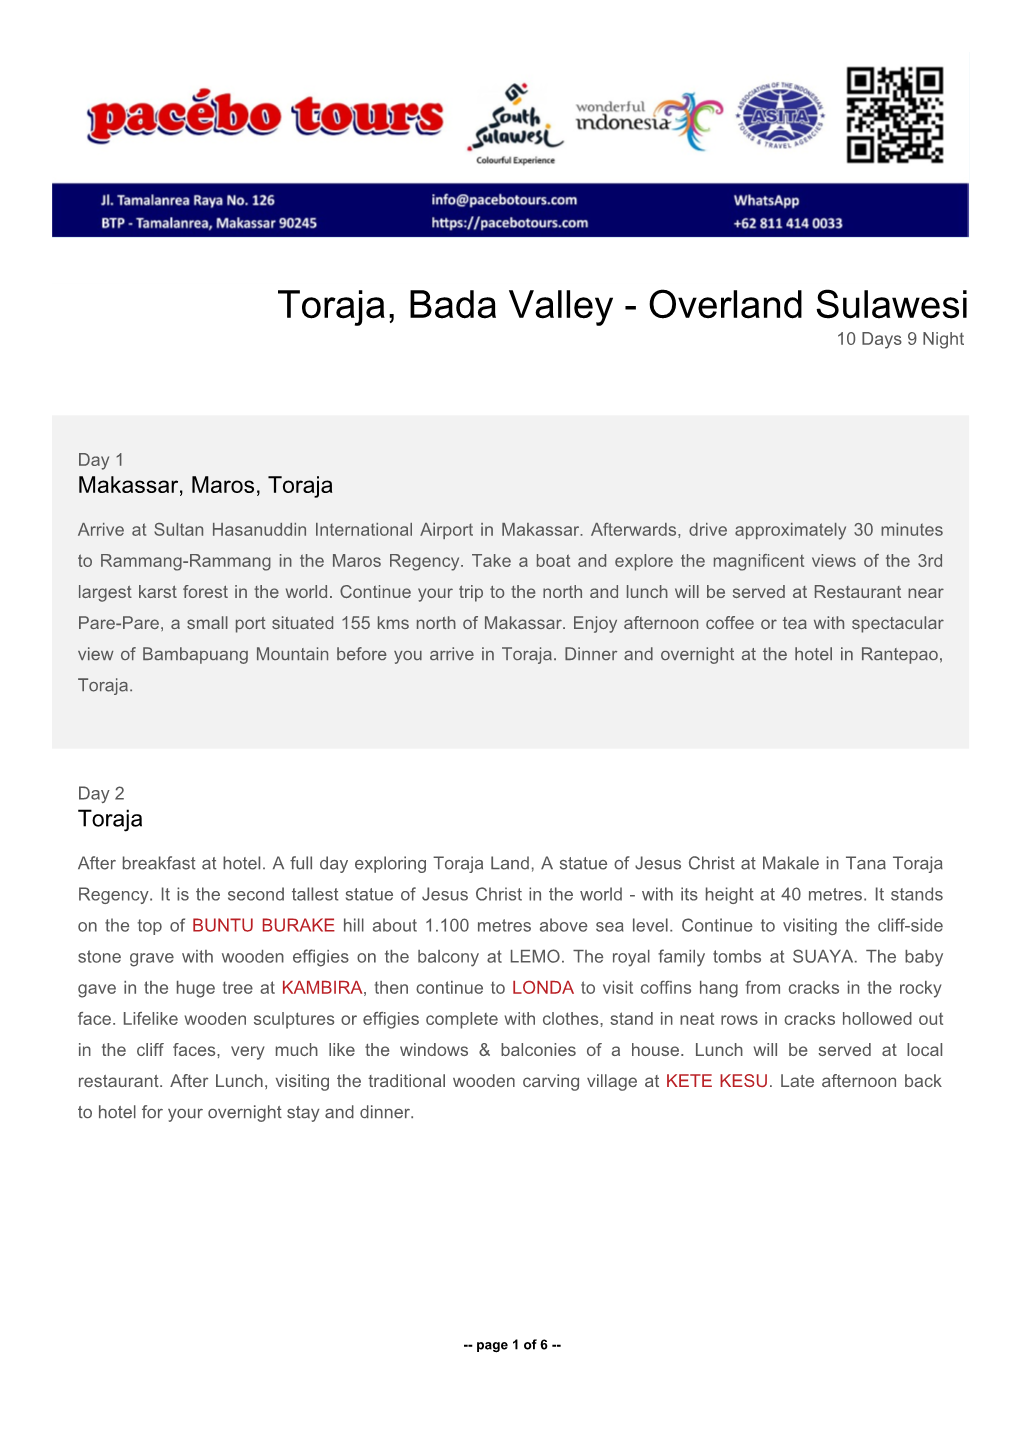 Toraja, Bada Valley - Overland Sulawesi 10 Days 9 Night